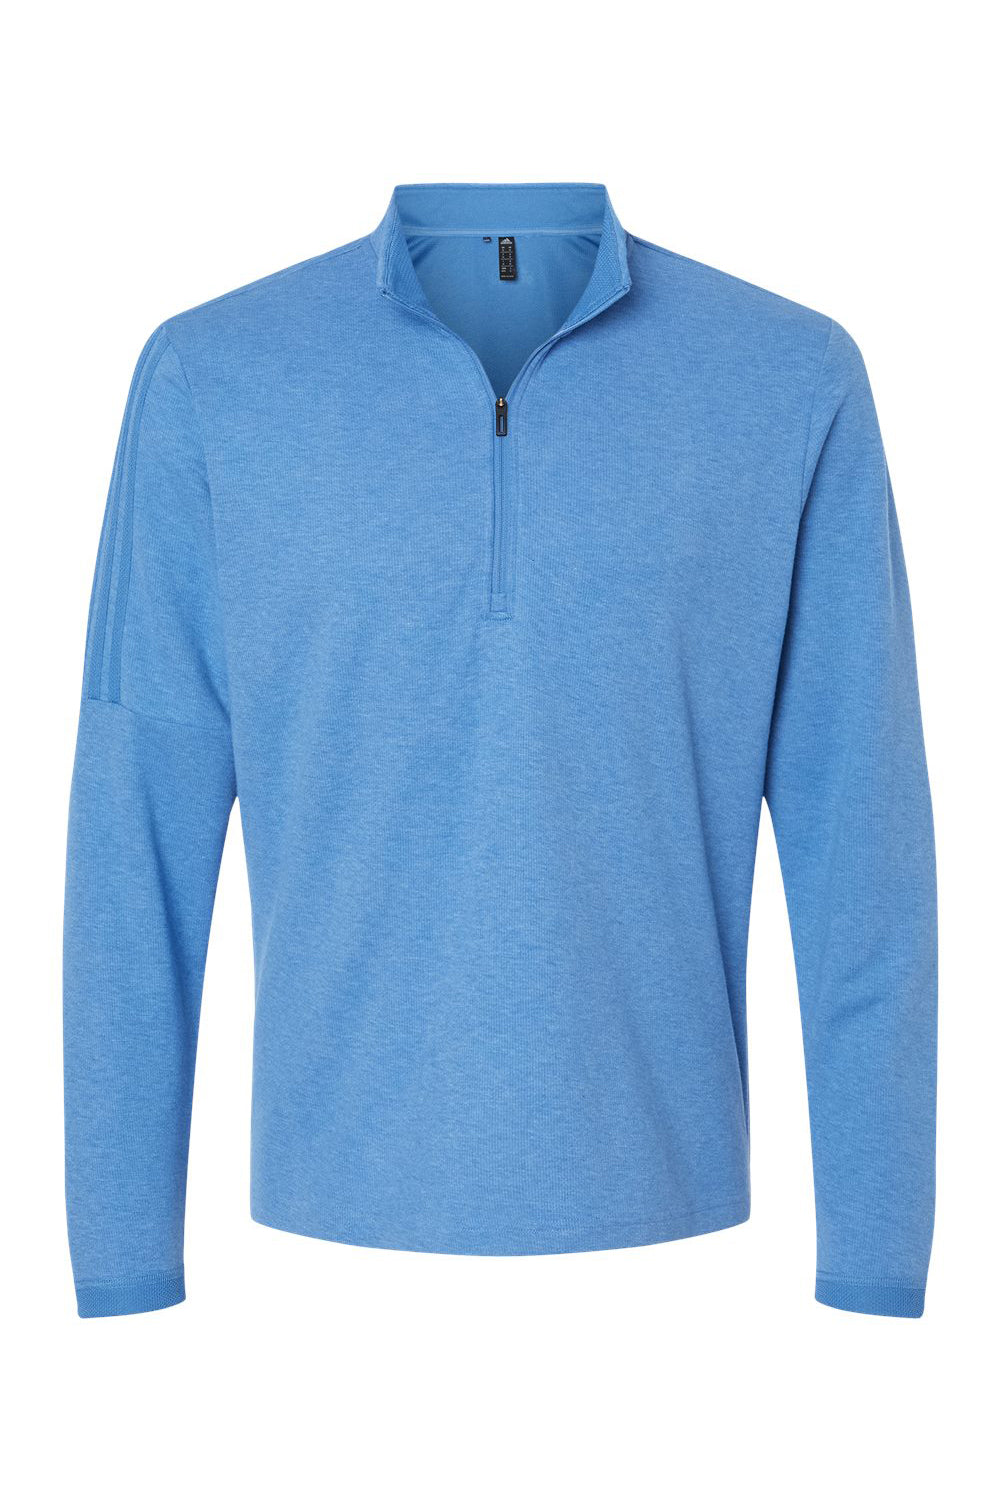 Adidas A554 Mens 3 Stripes Moisture Wicking 1/4 Zip Sweater Focus Blue Melange Flat Front